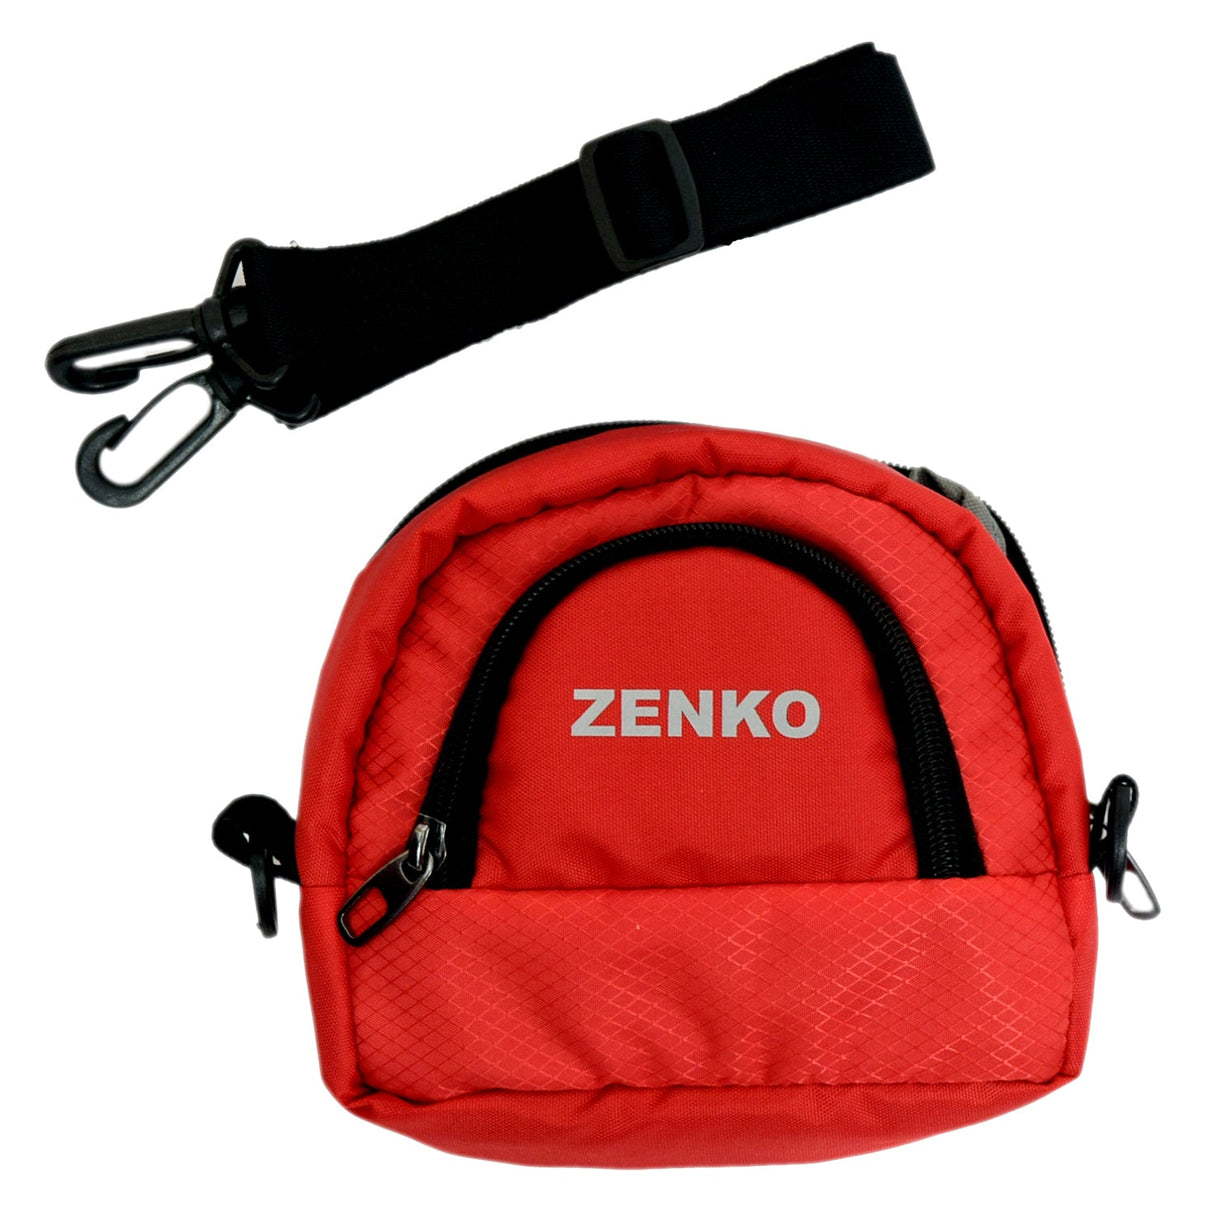 Zenko pouch for mini 7s instant camera bag Red